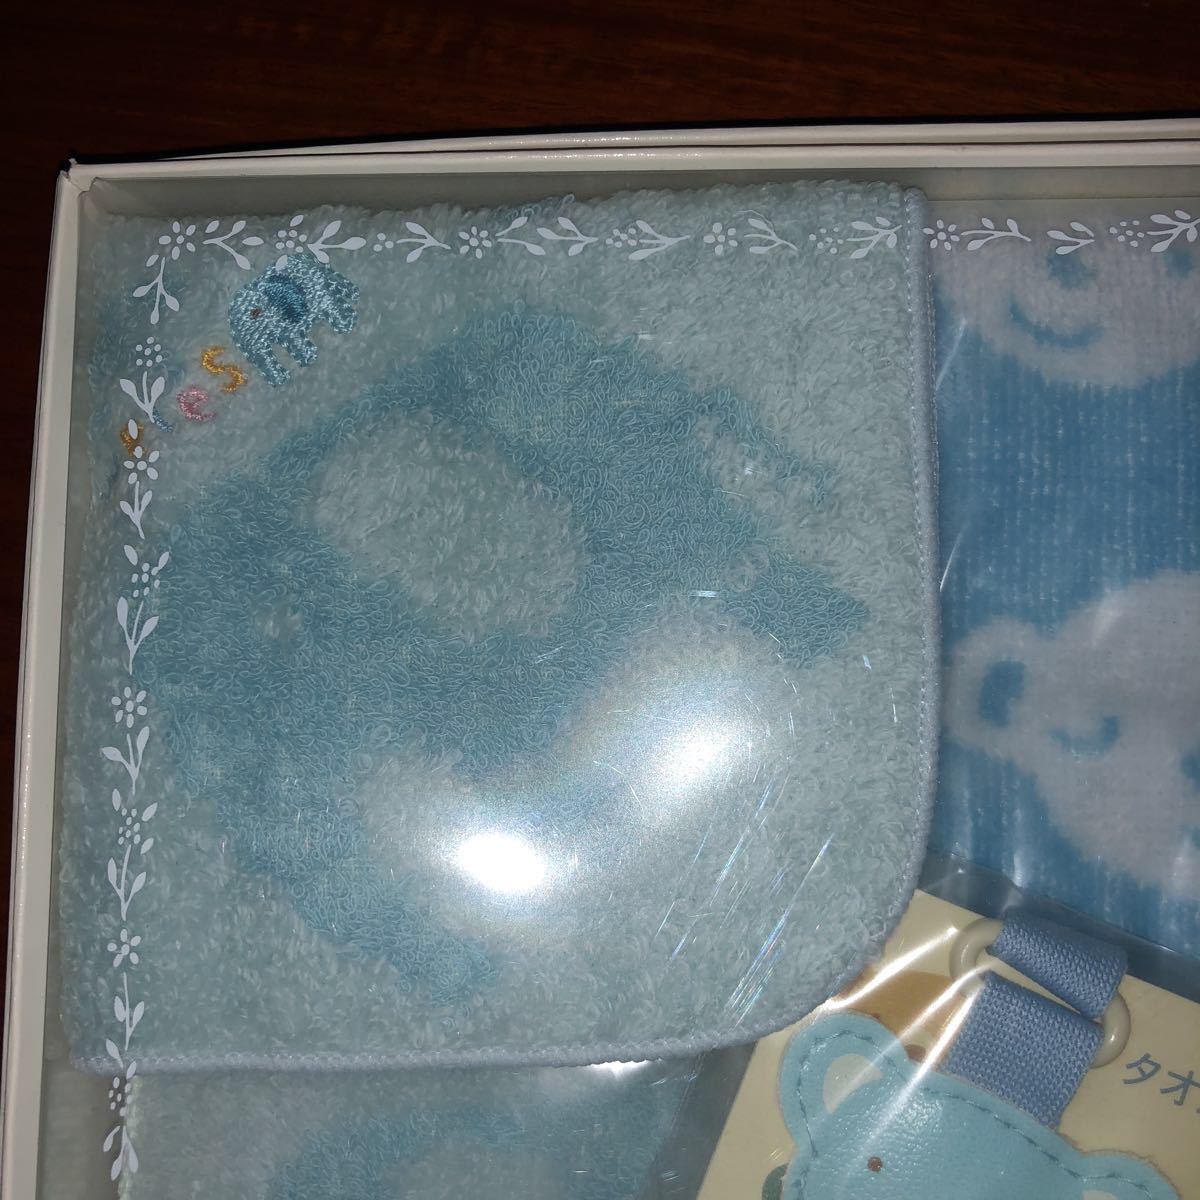 [mon acid yu|MON SEUIL][ weles| way ruz] baby gift set mascot * baby's bib * towel handkerchie * hand towel * towel clip 